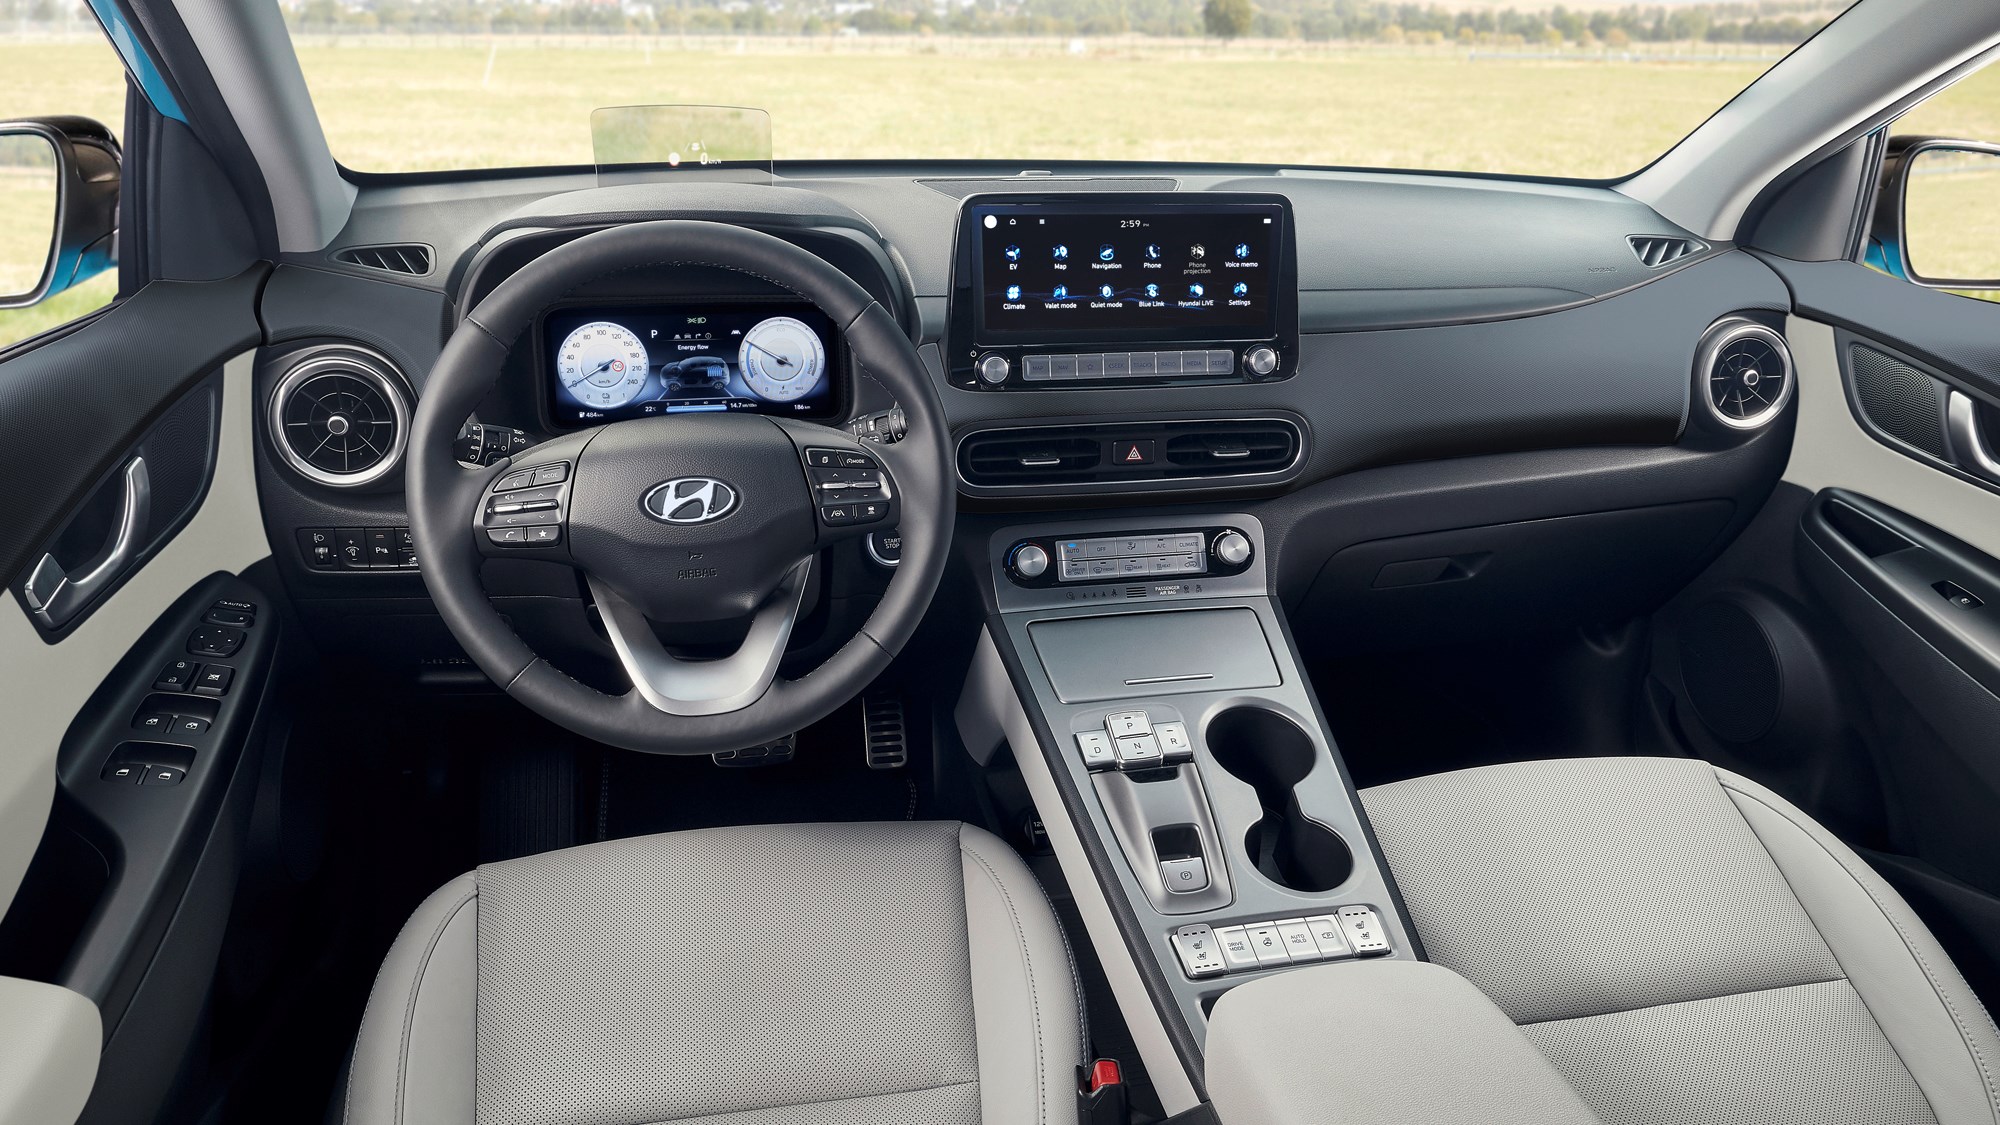 jas Raap Blozend New Hyundai Kona Electric Review | CAR Magazine